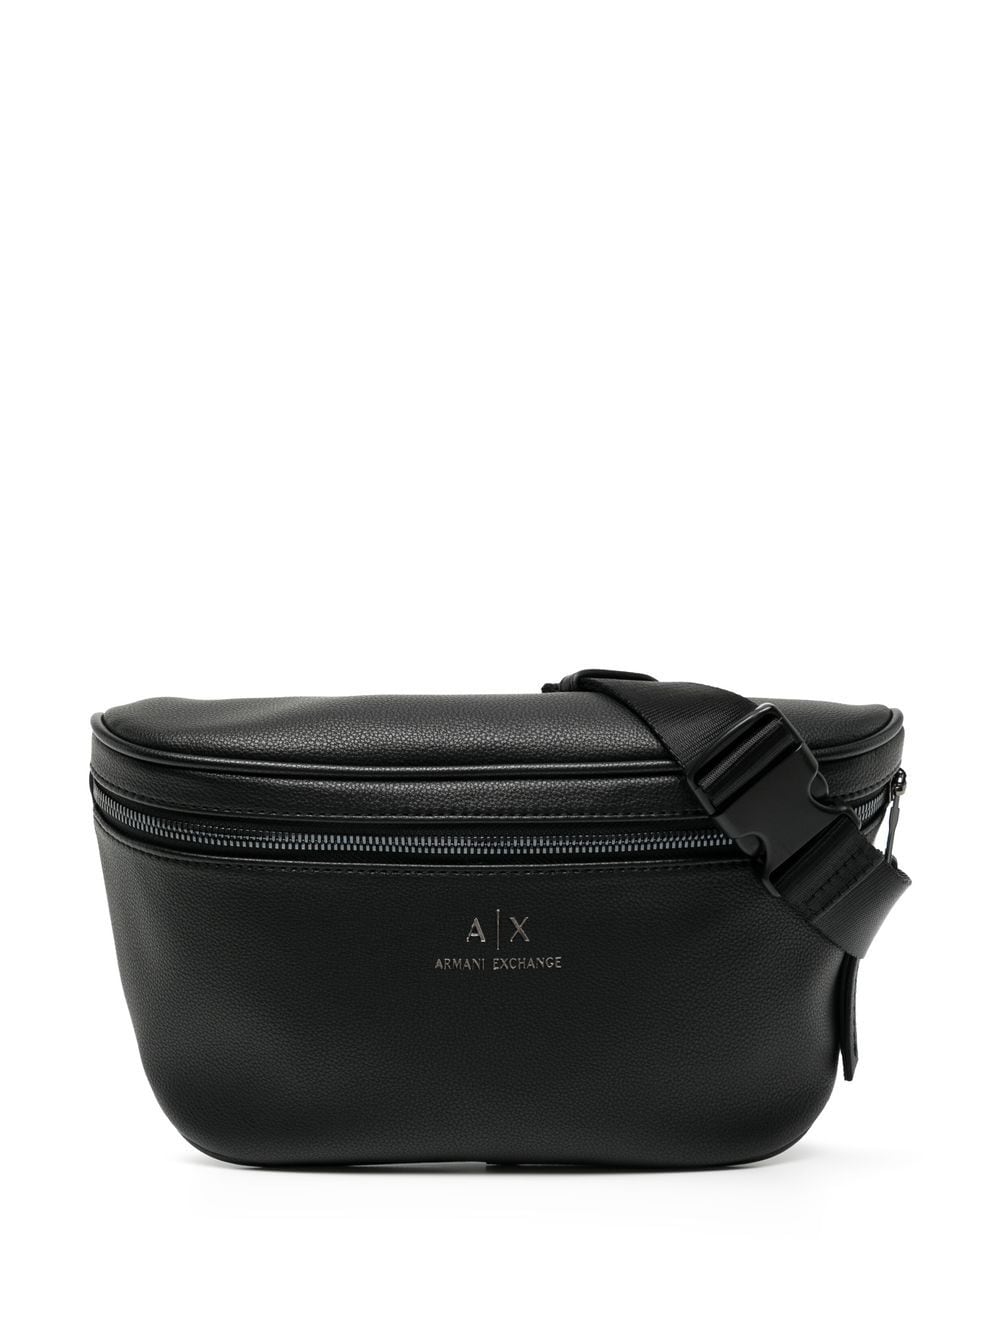 Armani Exchange ax man belt bag - Black von Armani Exchange